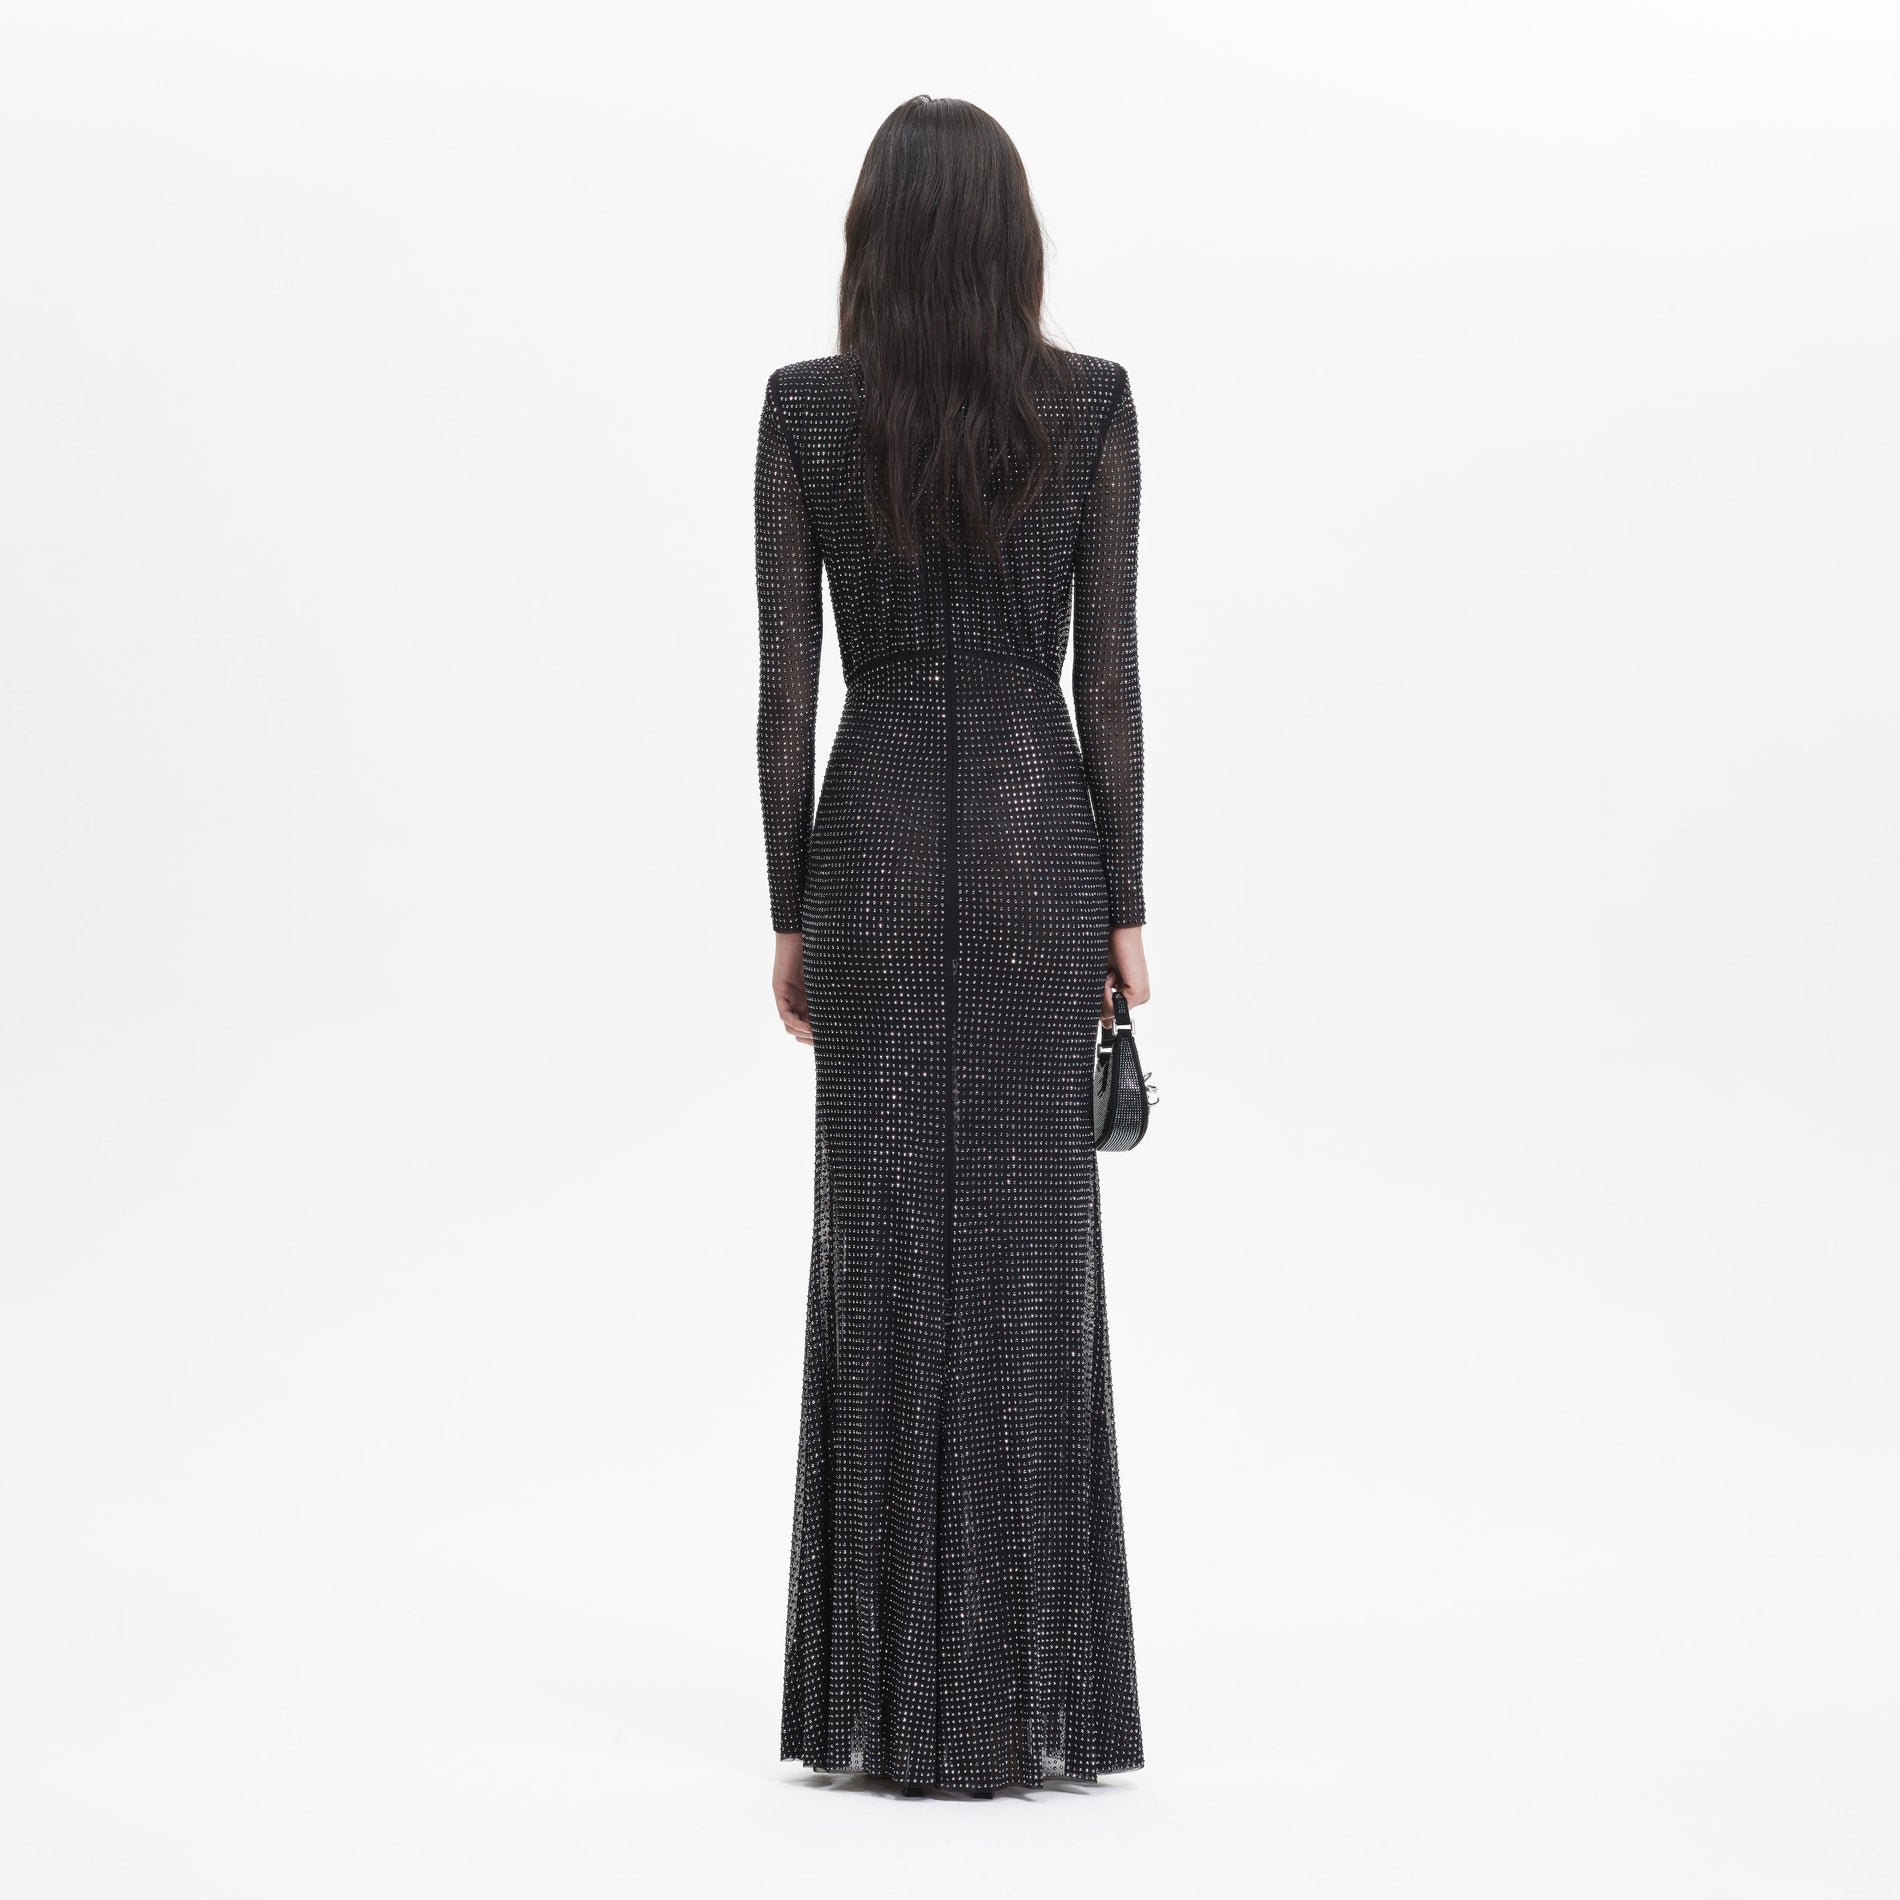 A woman wearing the Black Rhinestone Mesh Long Sleeve Maxi Dress